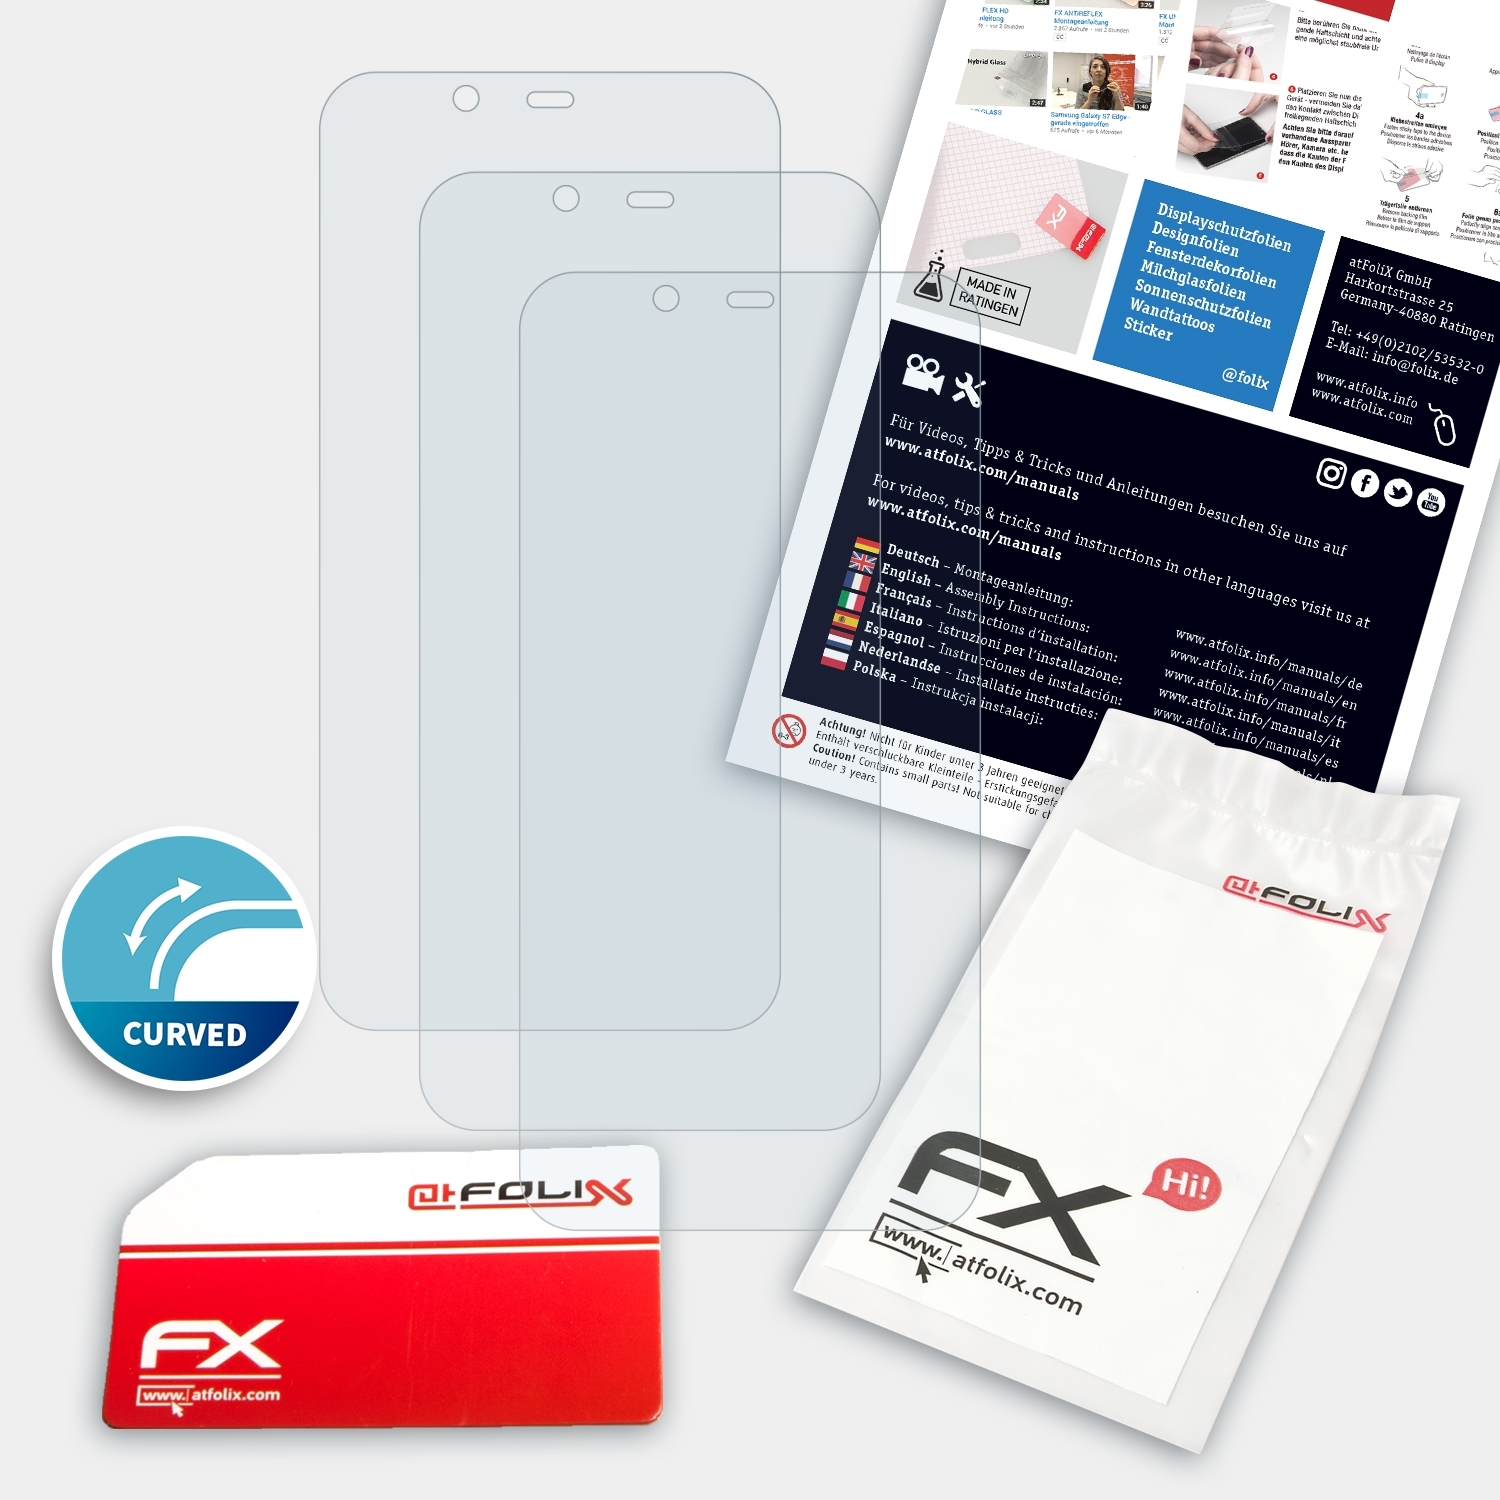 Displayschutz(für FX-ActiFleX 3x ATFOLIX Nokia 8.1)